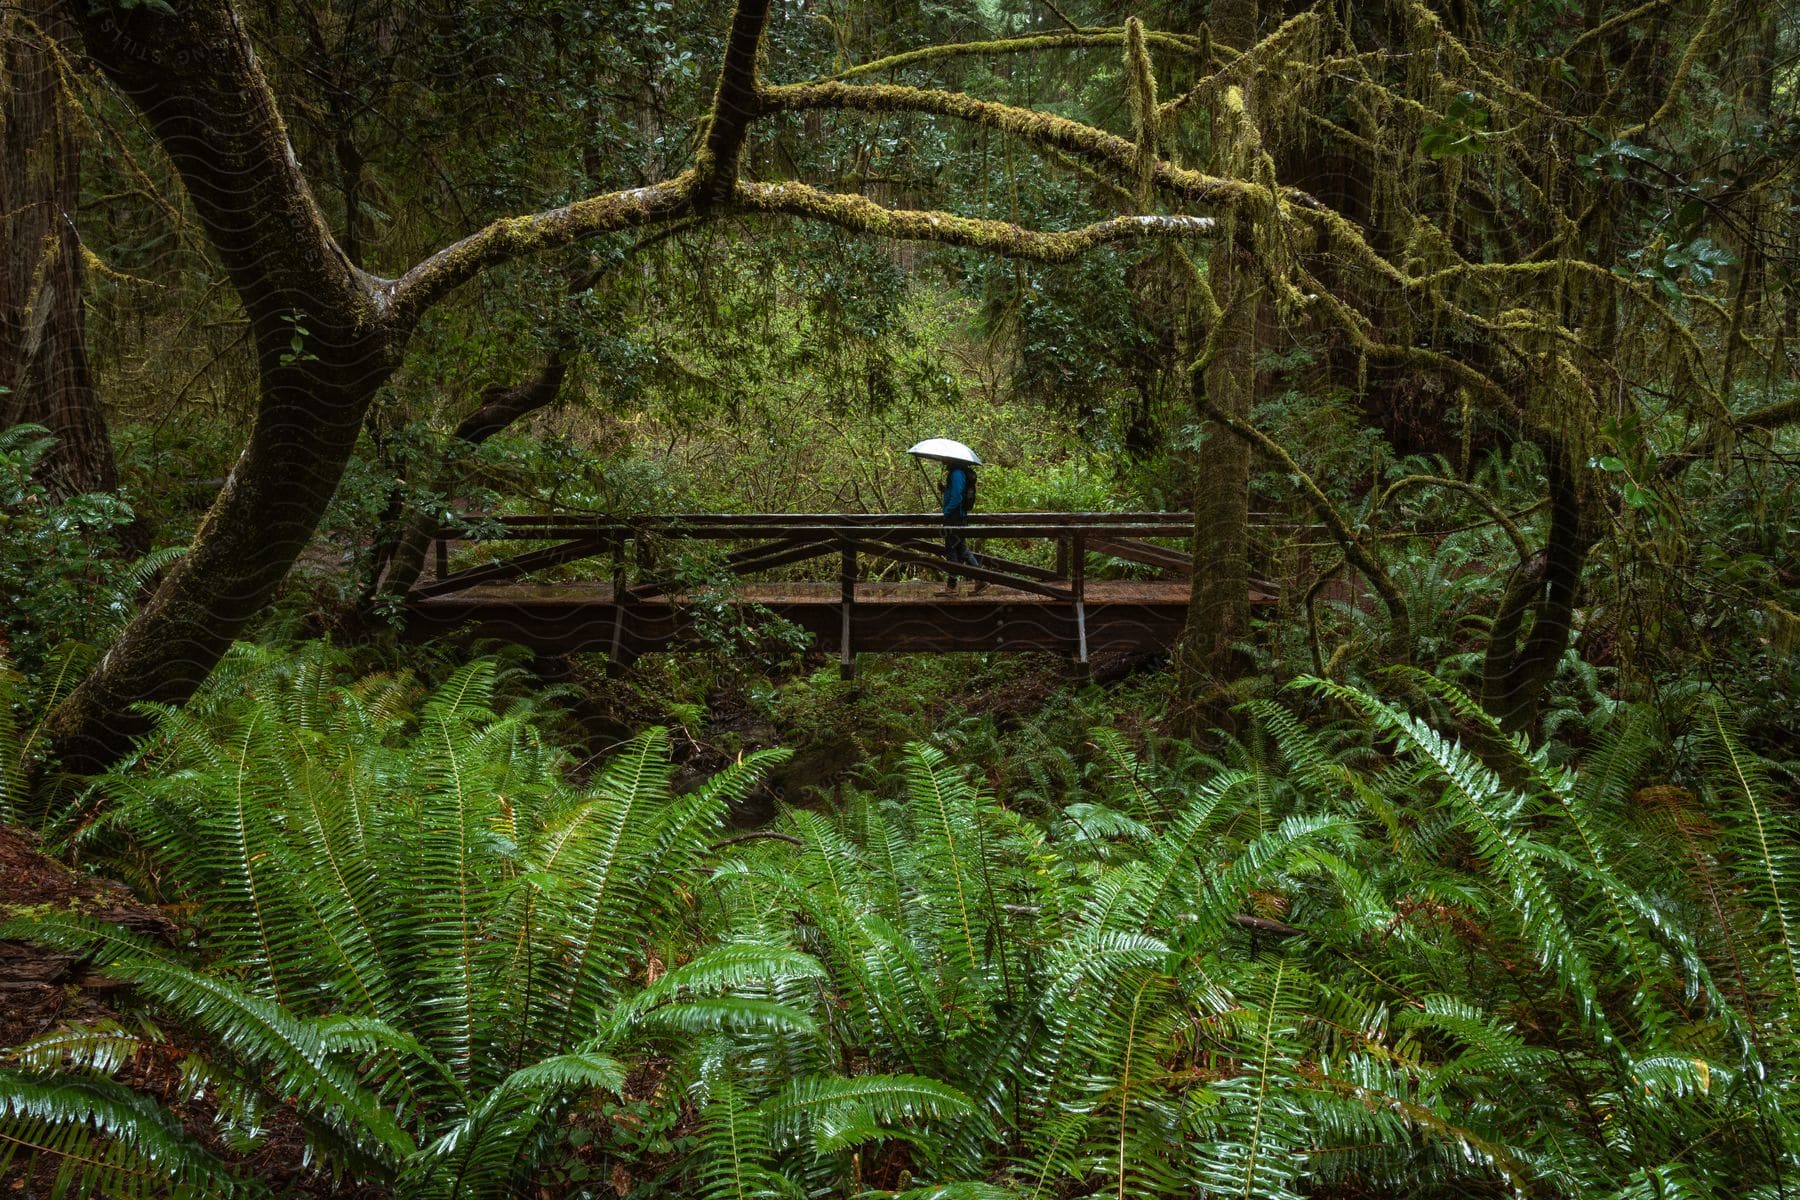 A person holding an umbrella walks across a footbridge in a rainforest